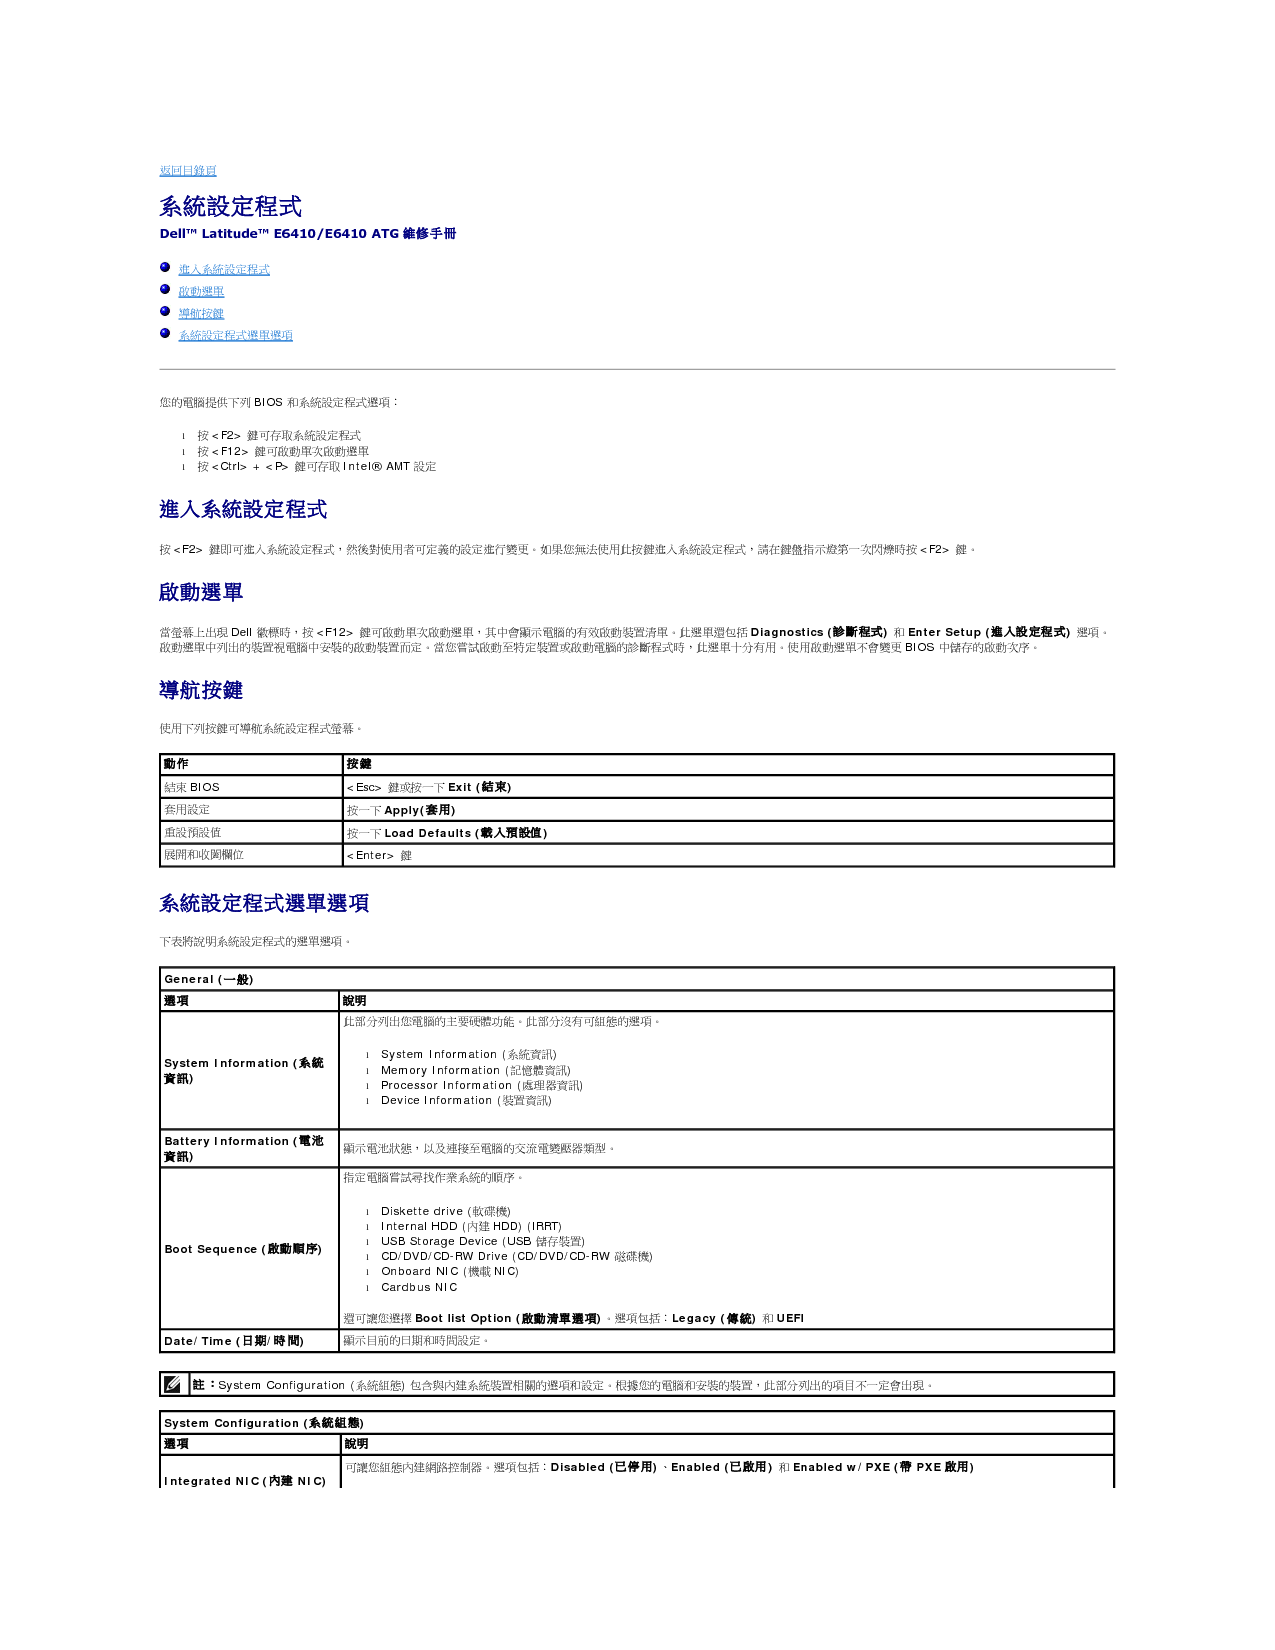 戴尔 Dell Latitude E6410 繁体 维修服务手册 第1页